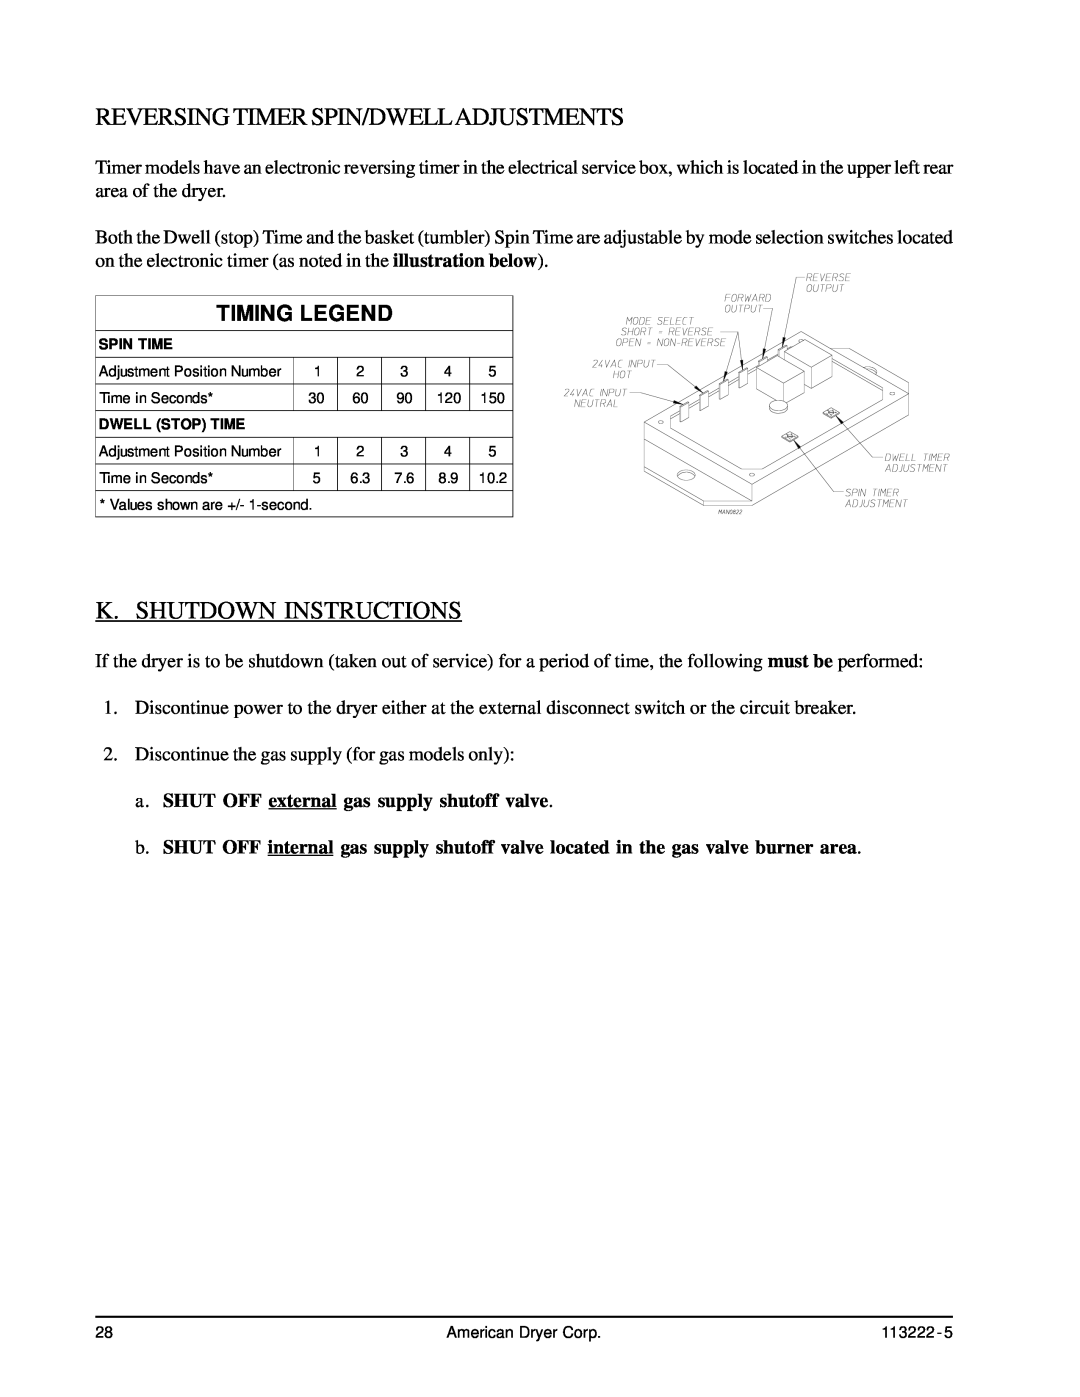 American Dryer Corp AD-24 Phase 7 Reversing Timer Spin/Dwelladjustments, K. Shutdown Instructions, Timing Legend 